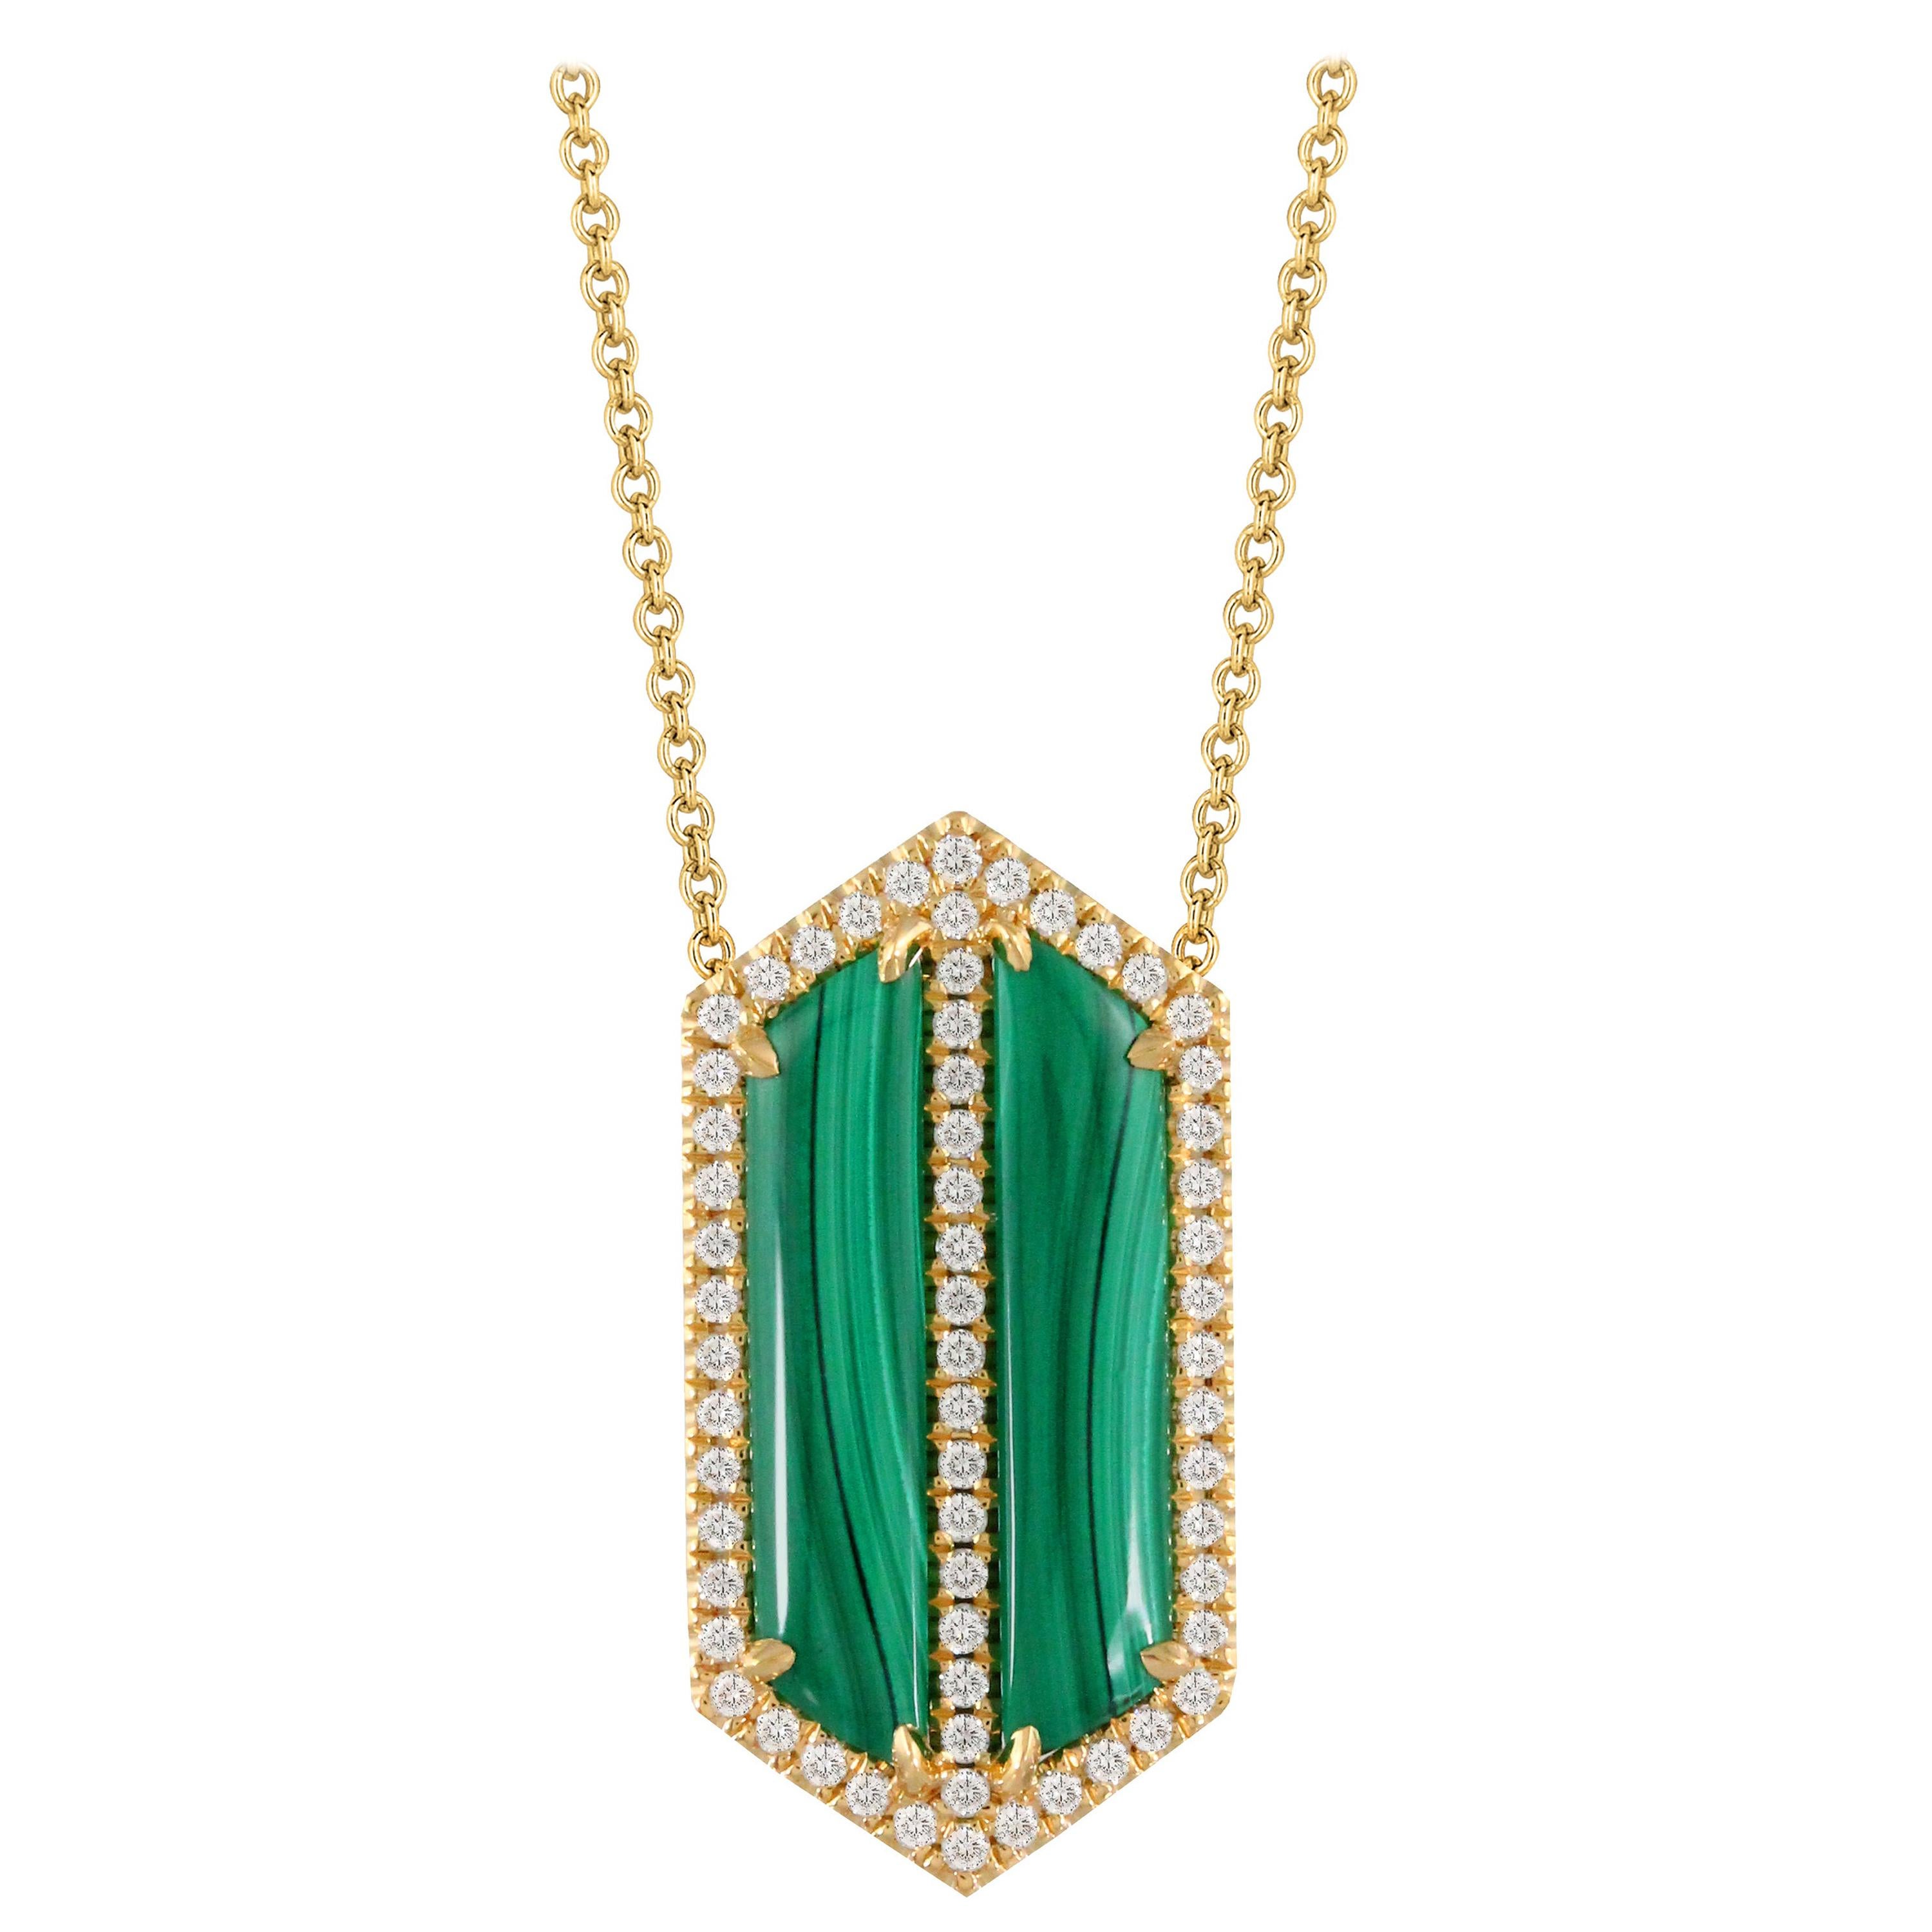 18 Karat Gold Art Deco Style Necklace with Cabochon Malachite and Diamonds